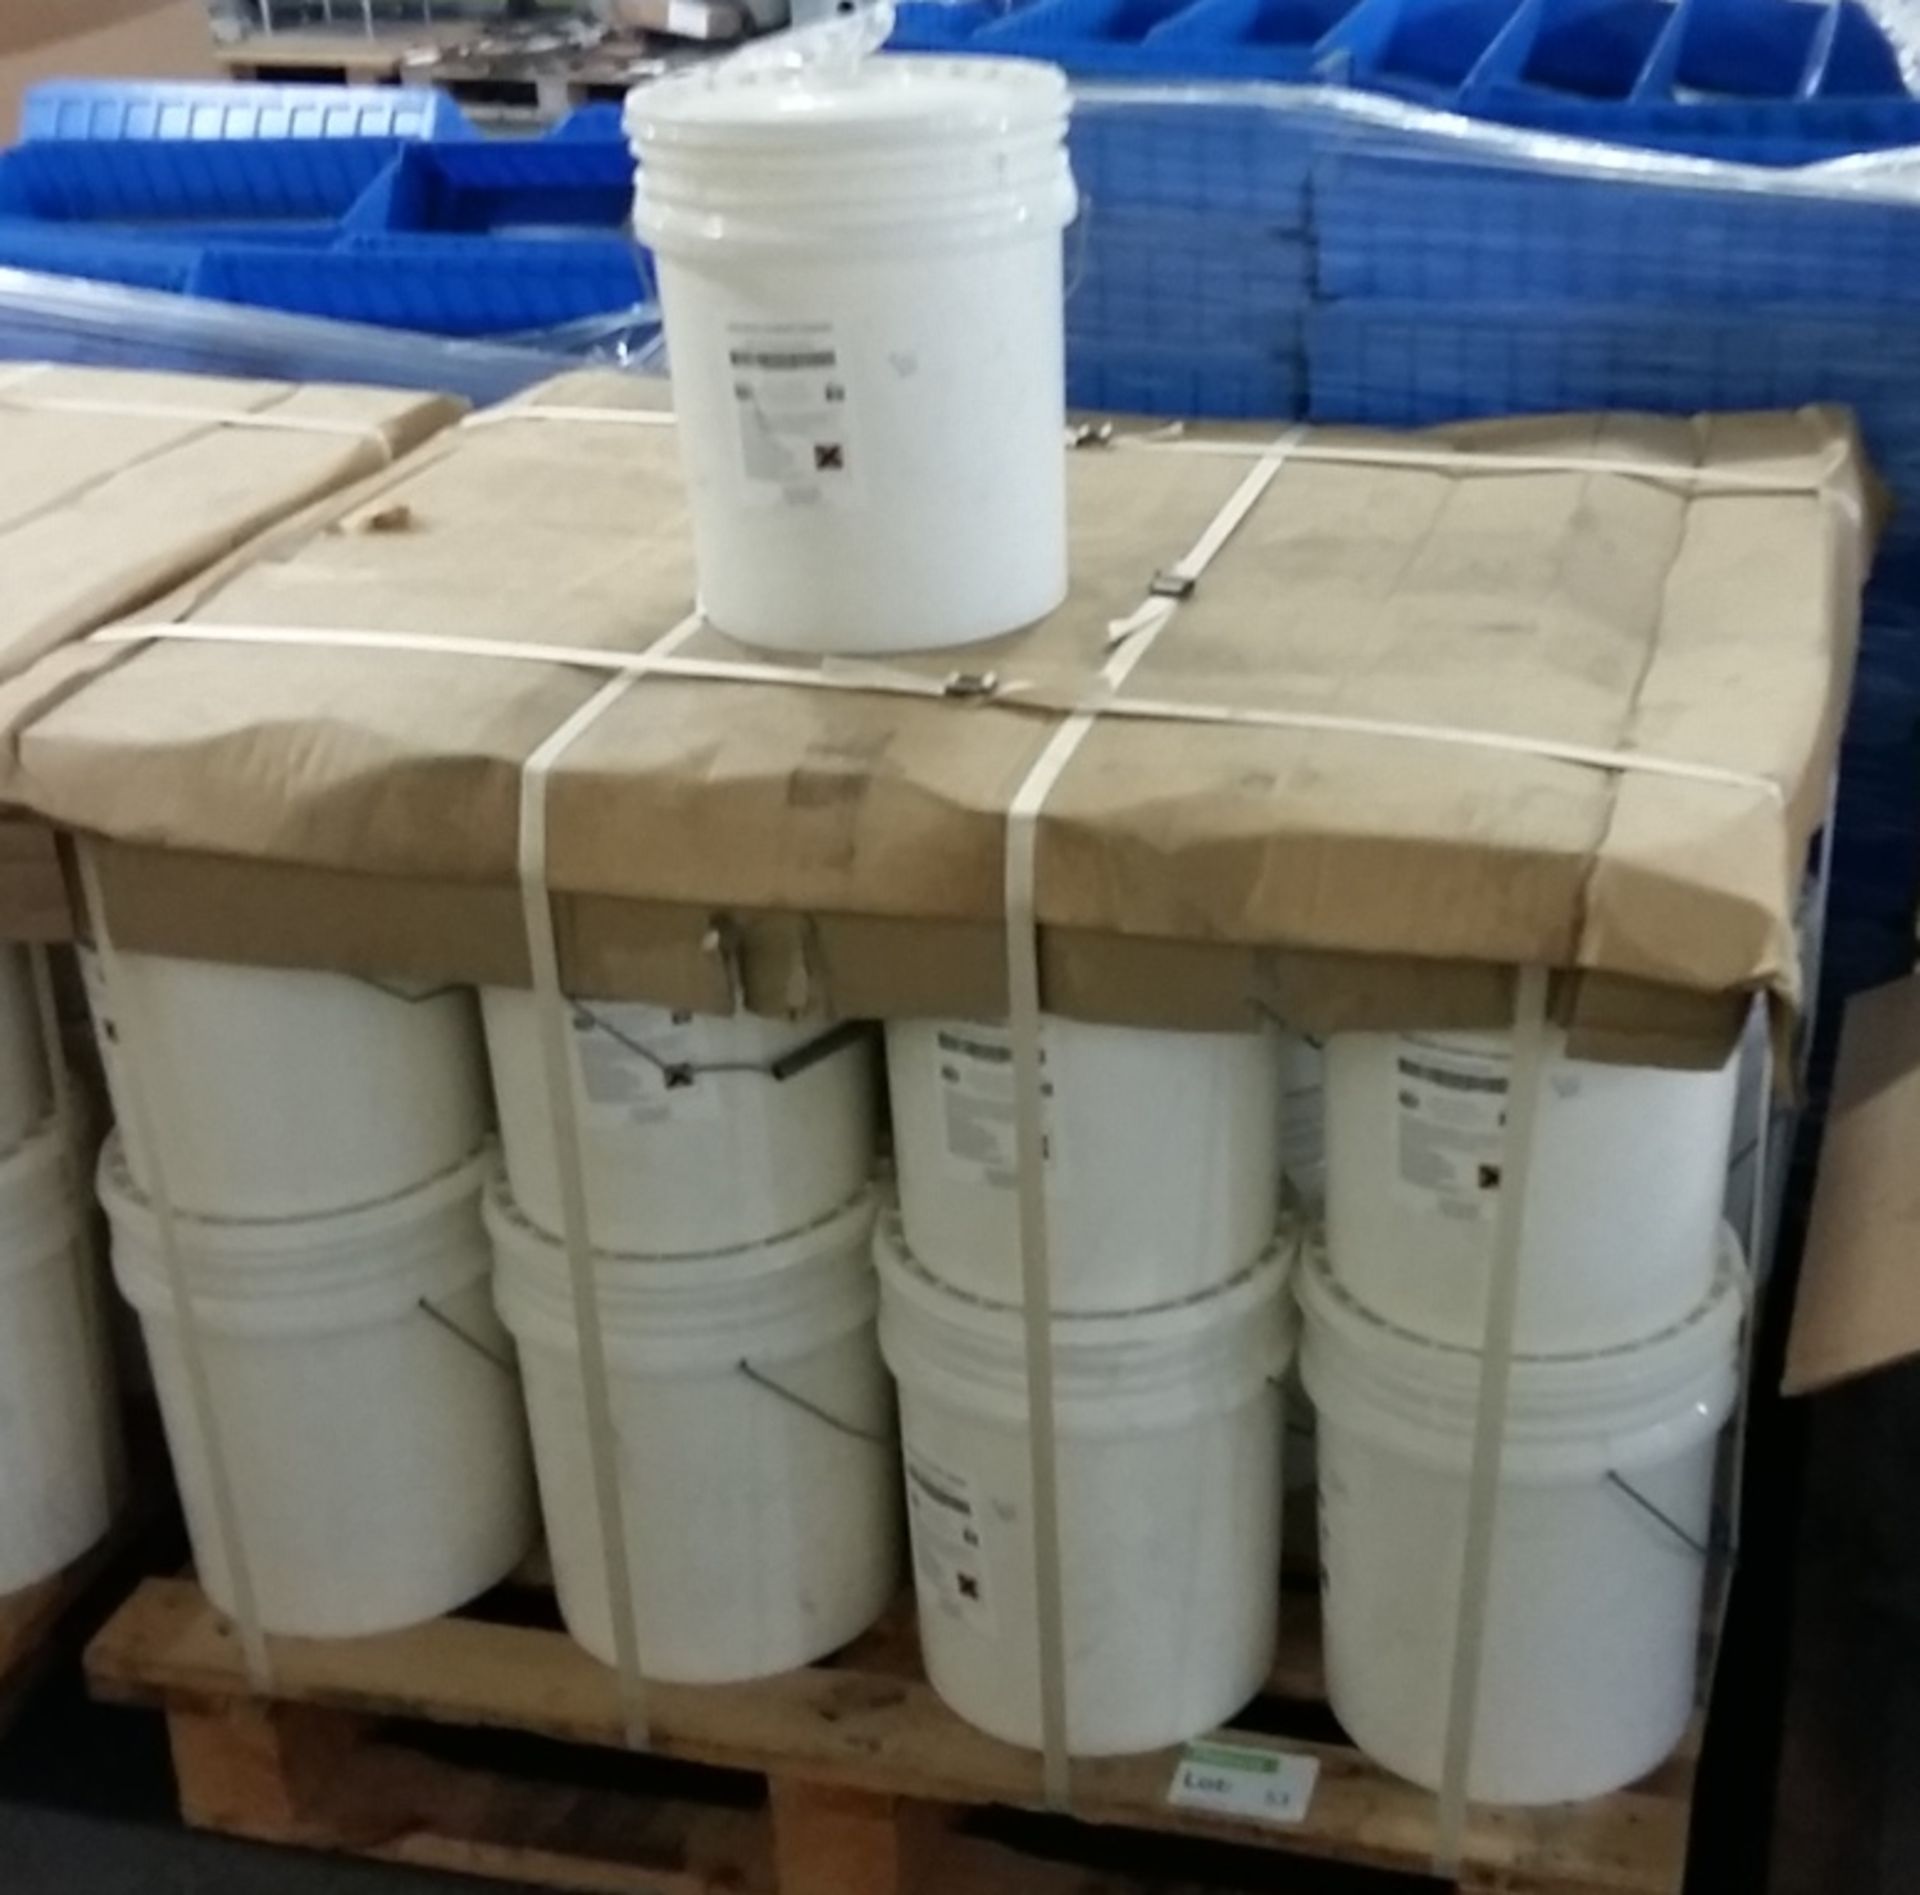 MoD laundry powder - 25kg tubs NSN 7930-99-932-6958 - 23 tubs